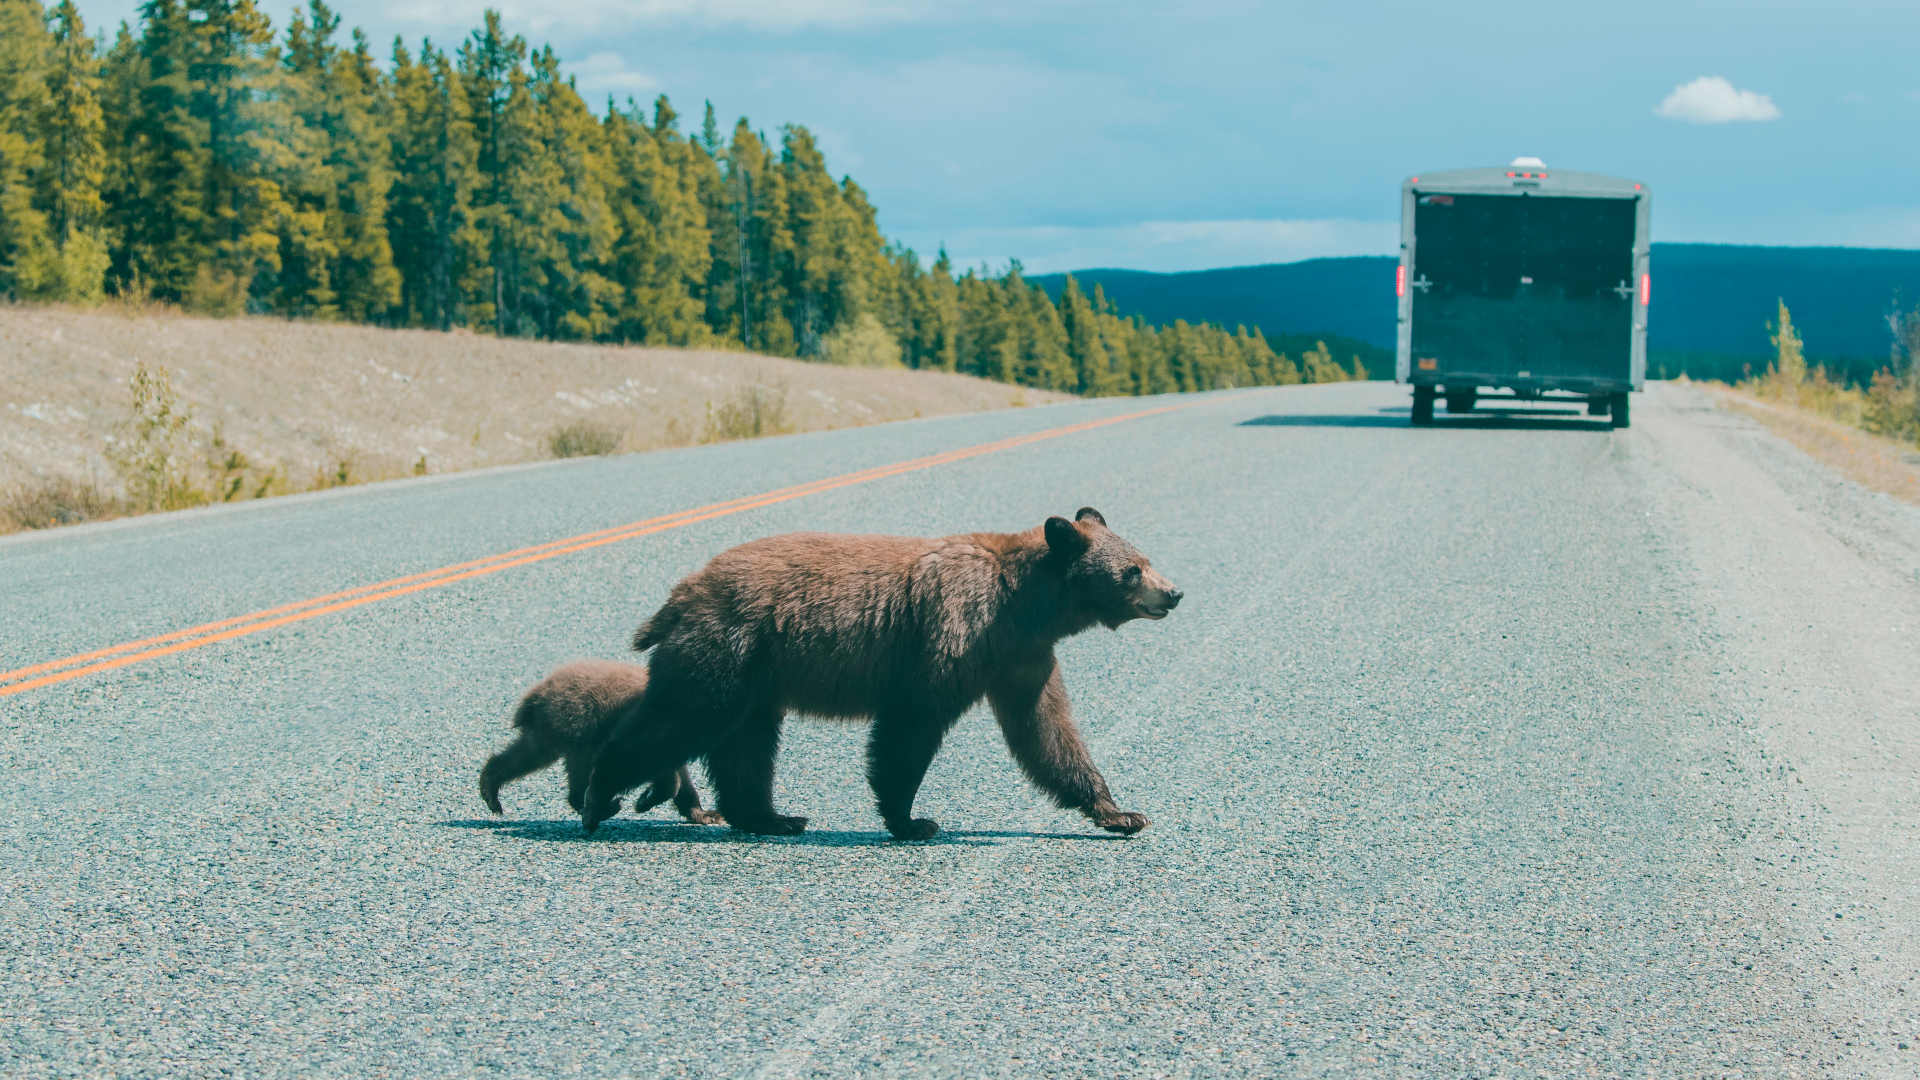 Bear and cub crossing street behind truck